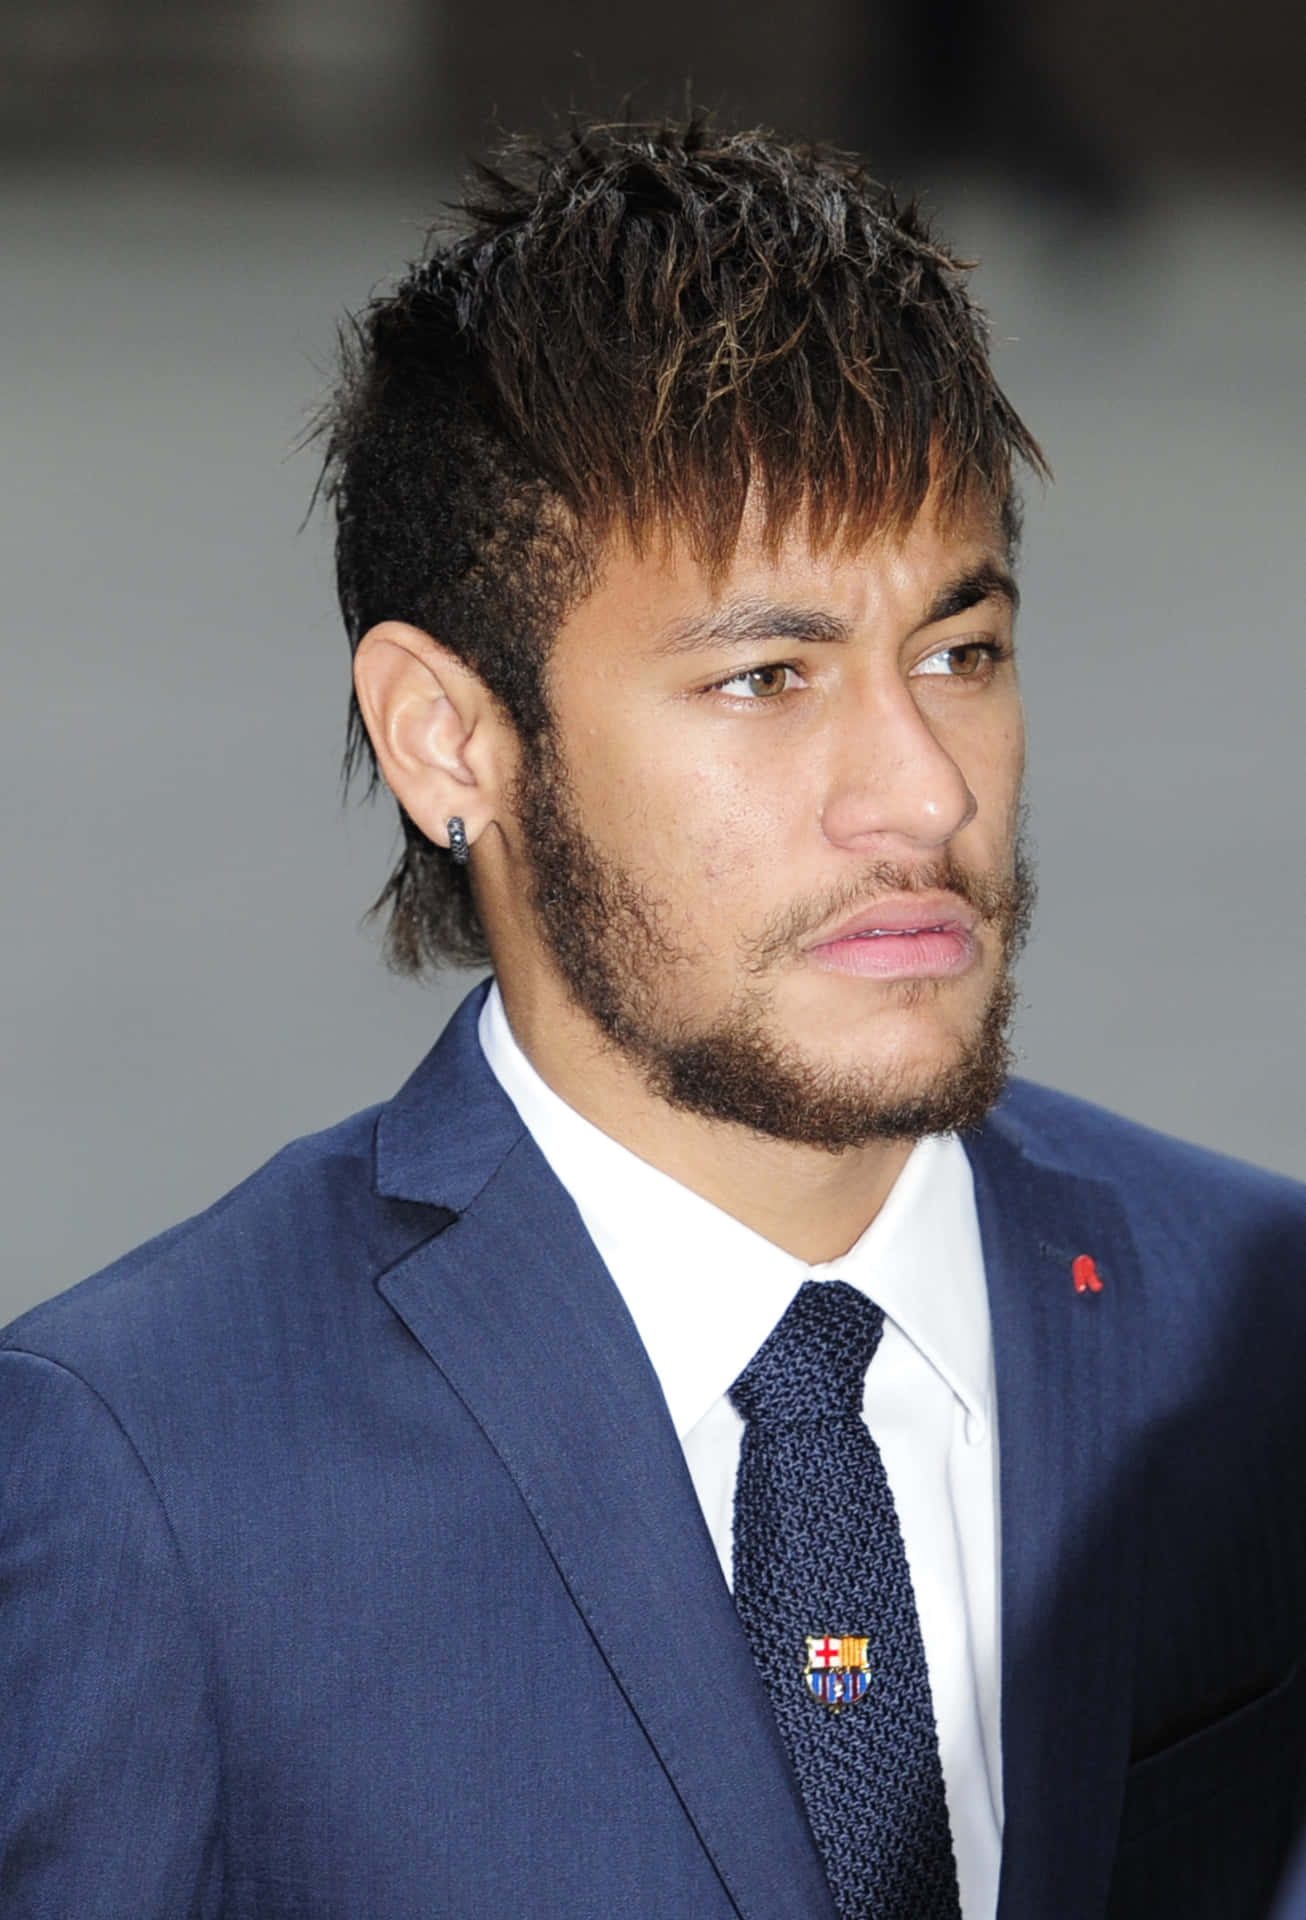 Neymar Profilein Suitand Beard Wallpaper